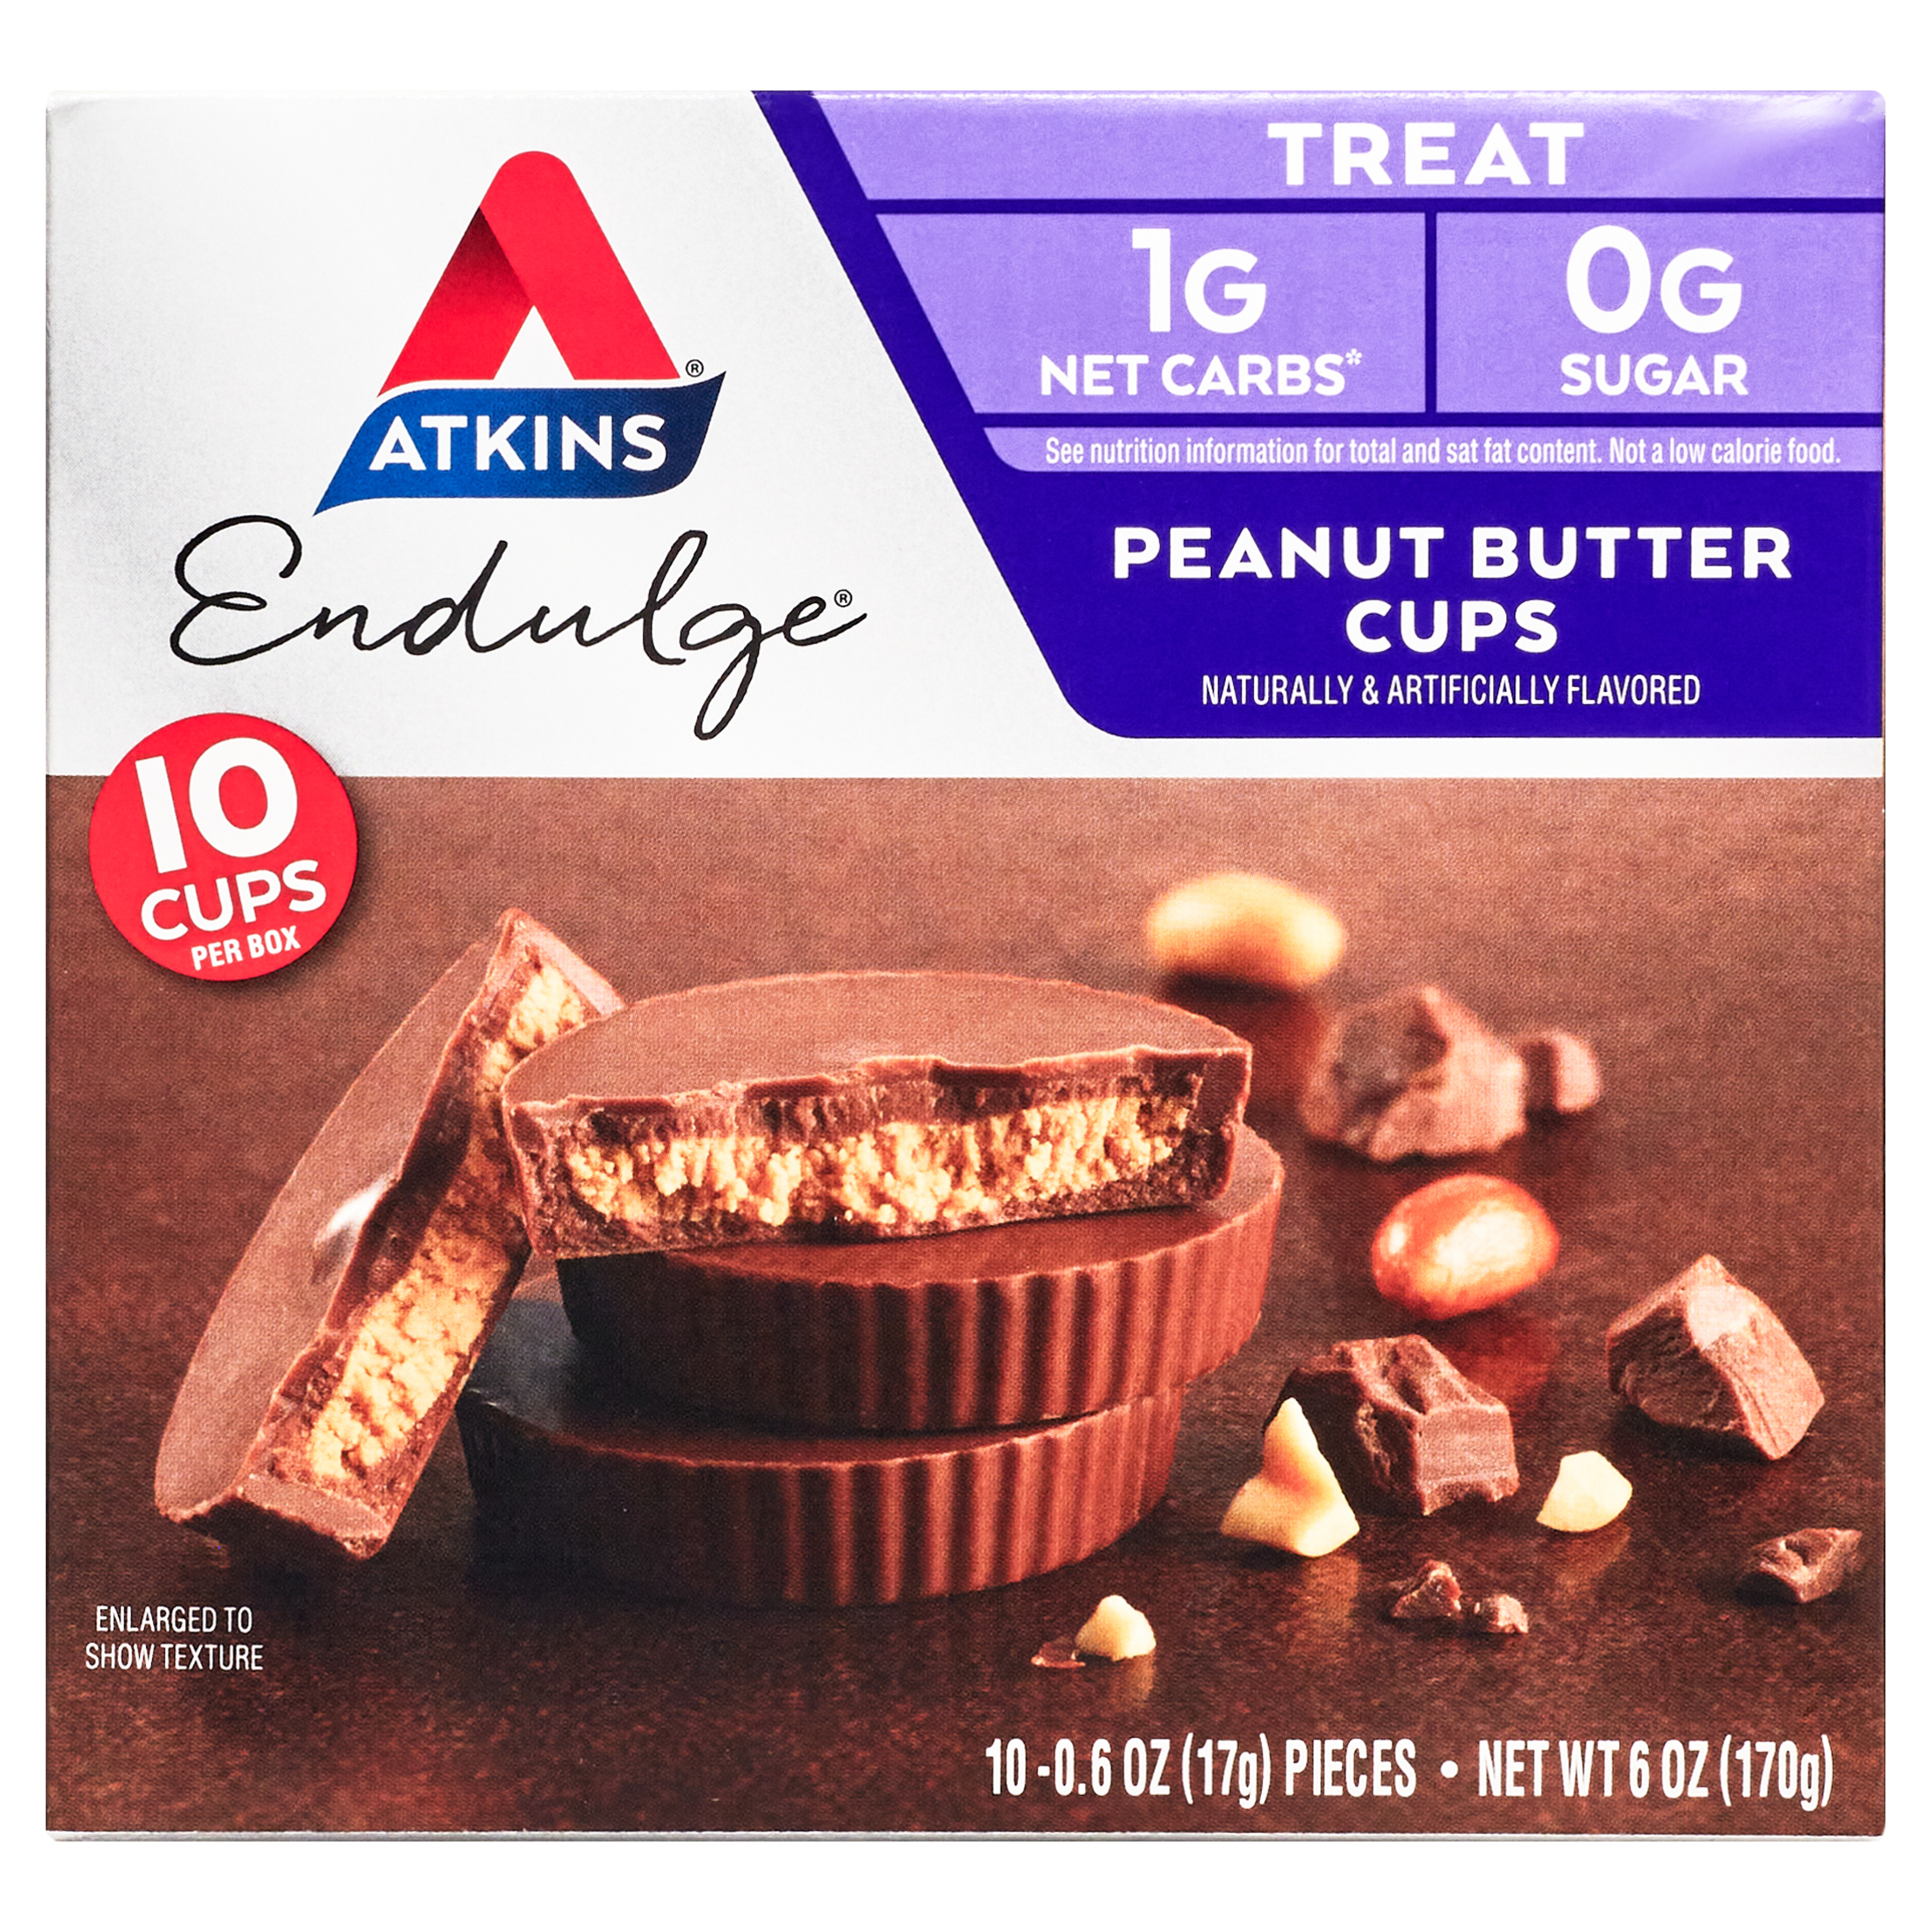 Atkins Endulge Peanut Butter Cups, Dessert Favorite, Low Carb, Low Sugar, 10 Ct - image 1 of 7